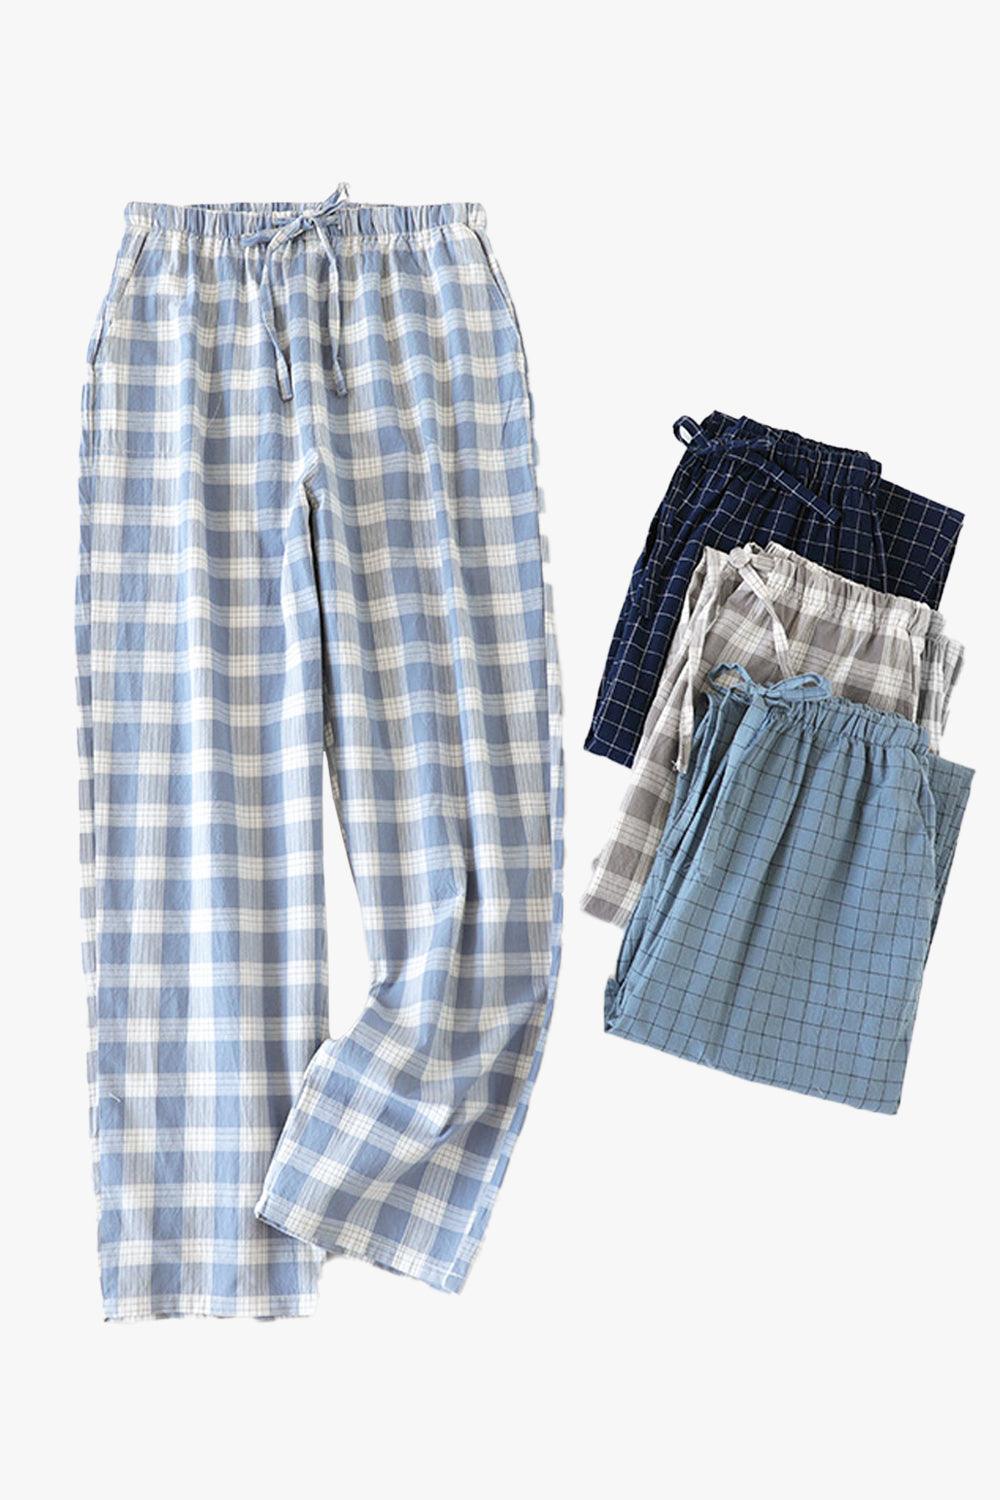 Plaid Grid Soft Girl Pajama Pants - Aesthetic Clothes Shop